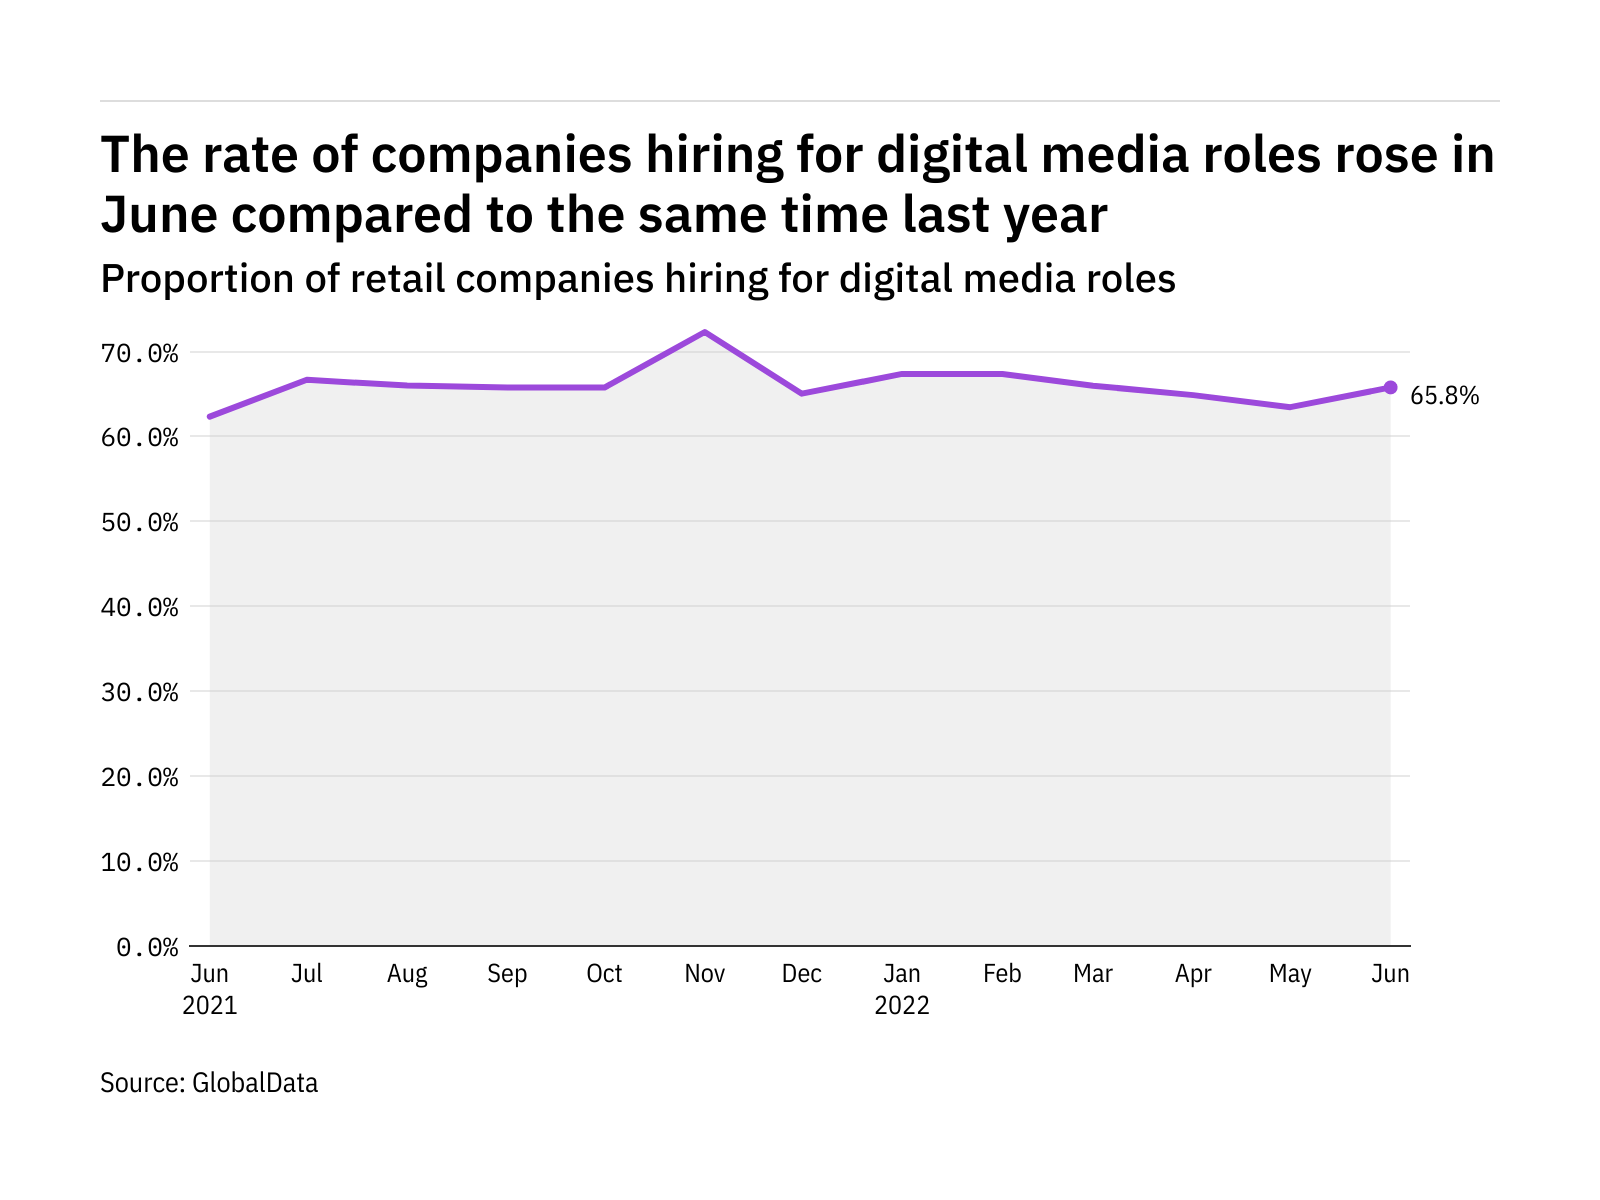 Digital media hiring levels in the retail industry rose in June 2022